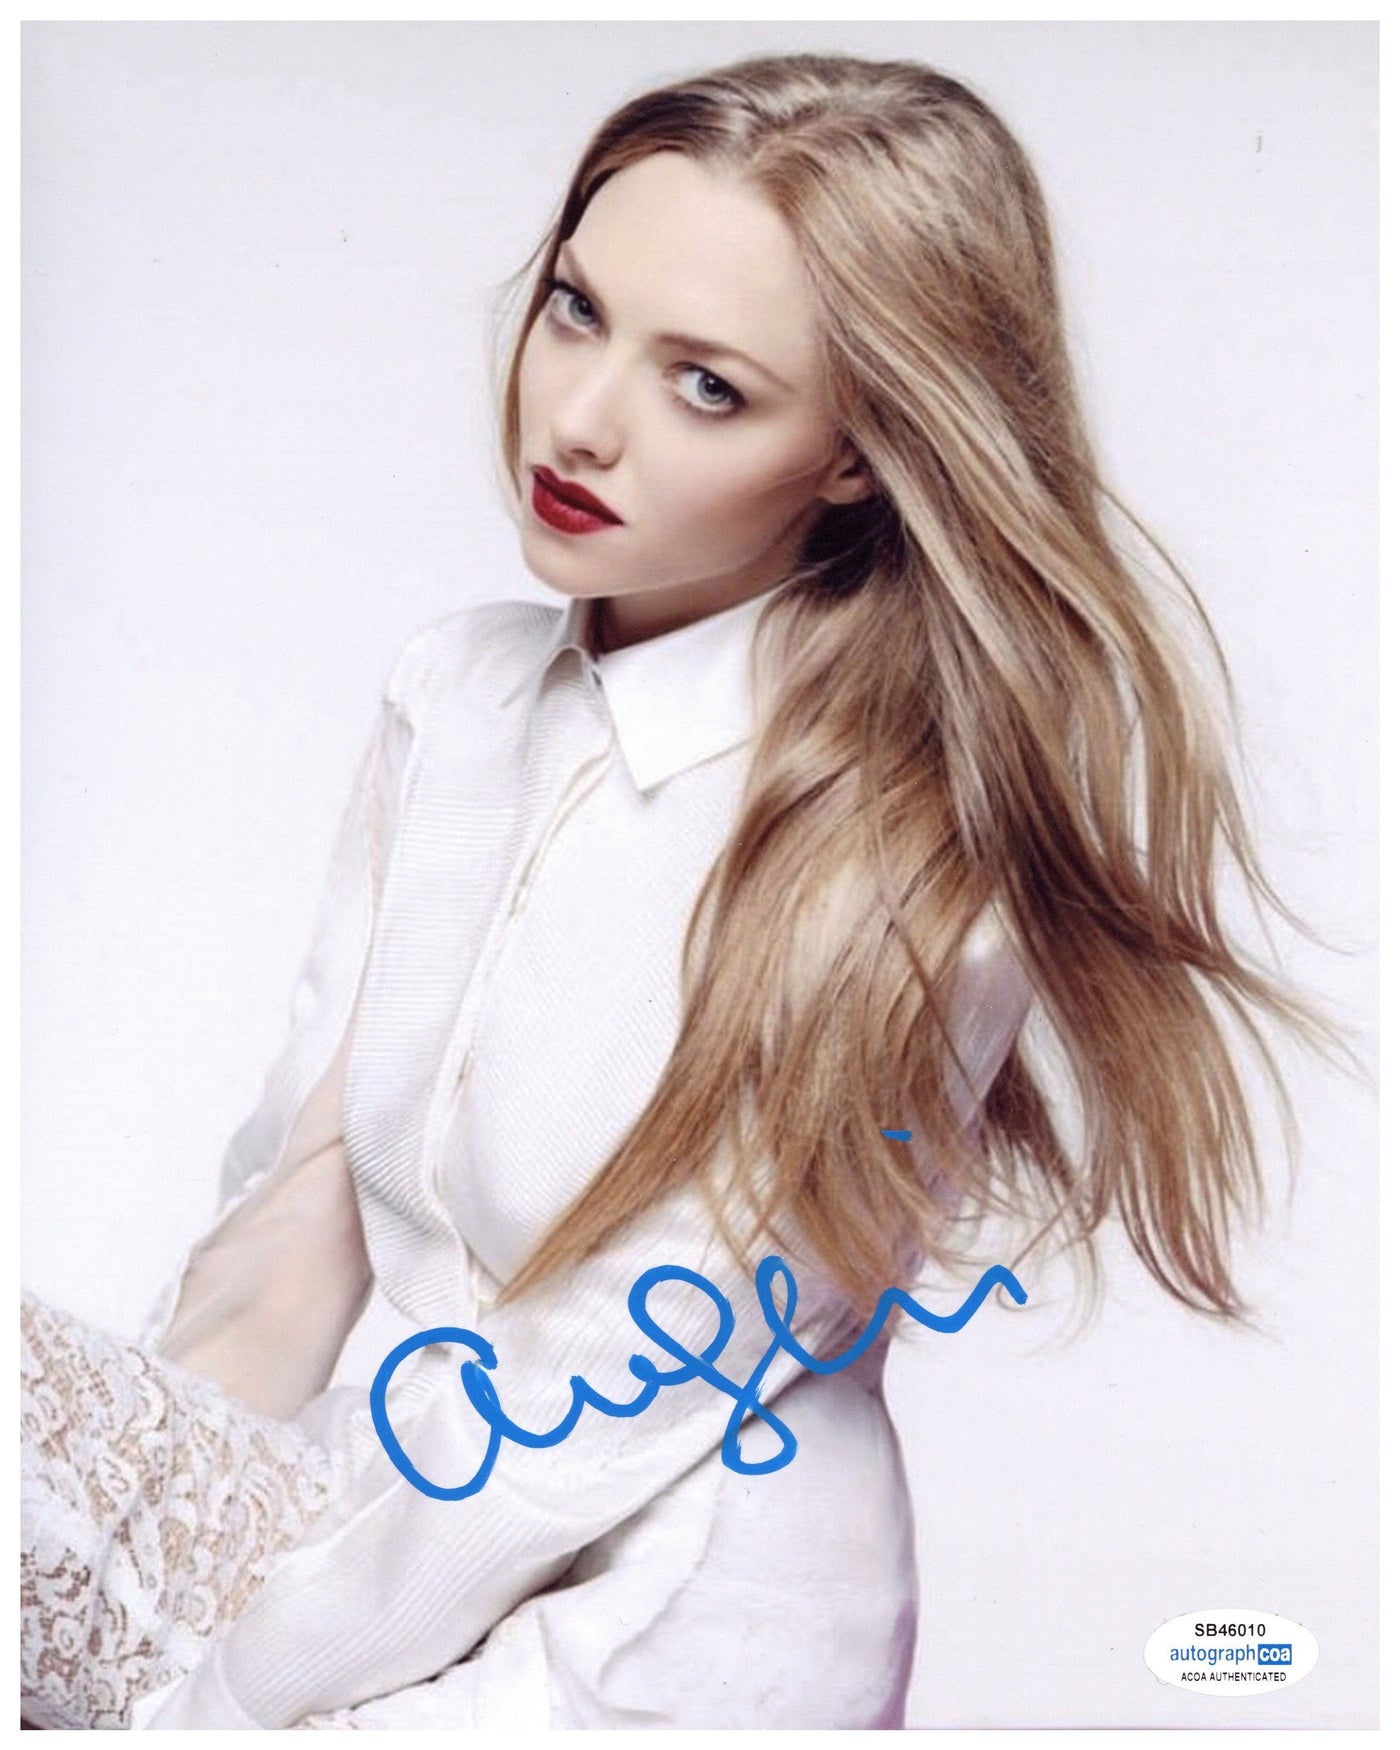 Amanda Seyfried Signed 8x10 Photo Mean Girls Autographed AutographCOA #1